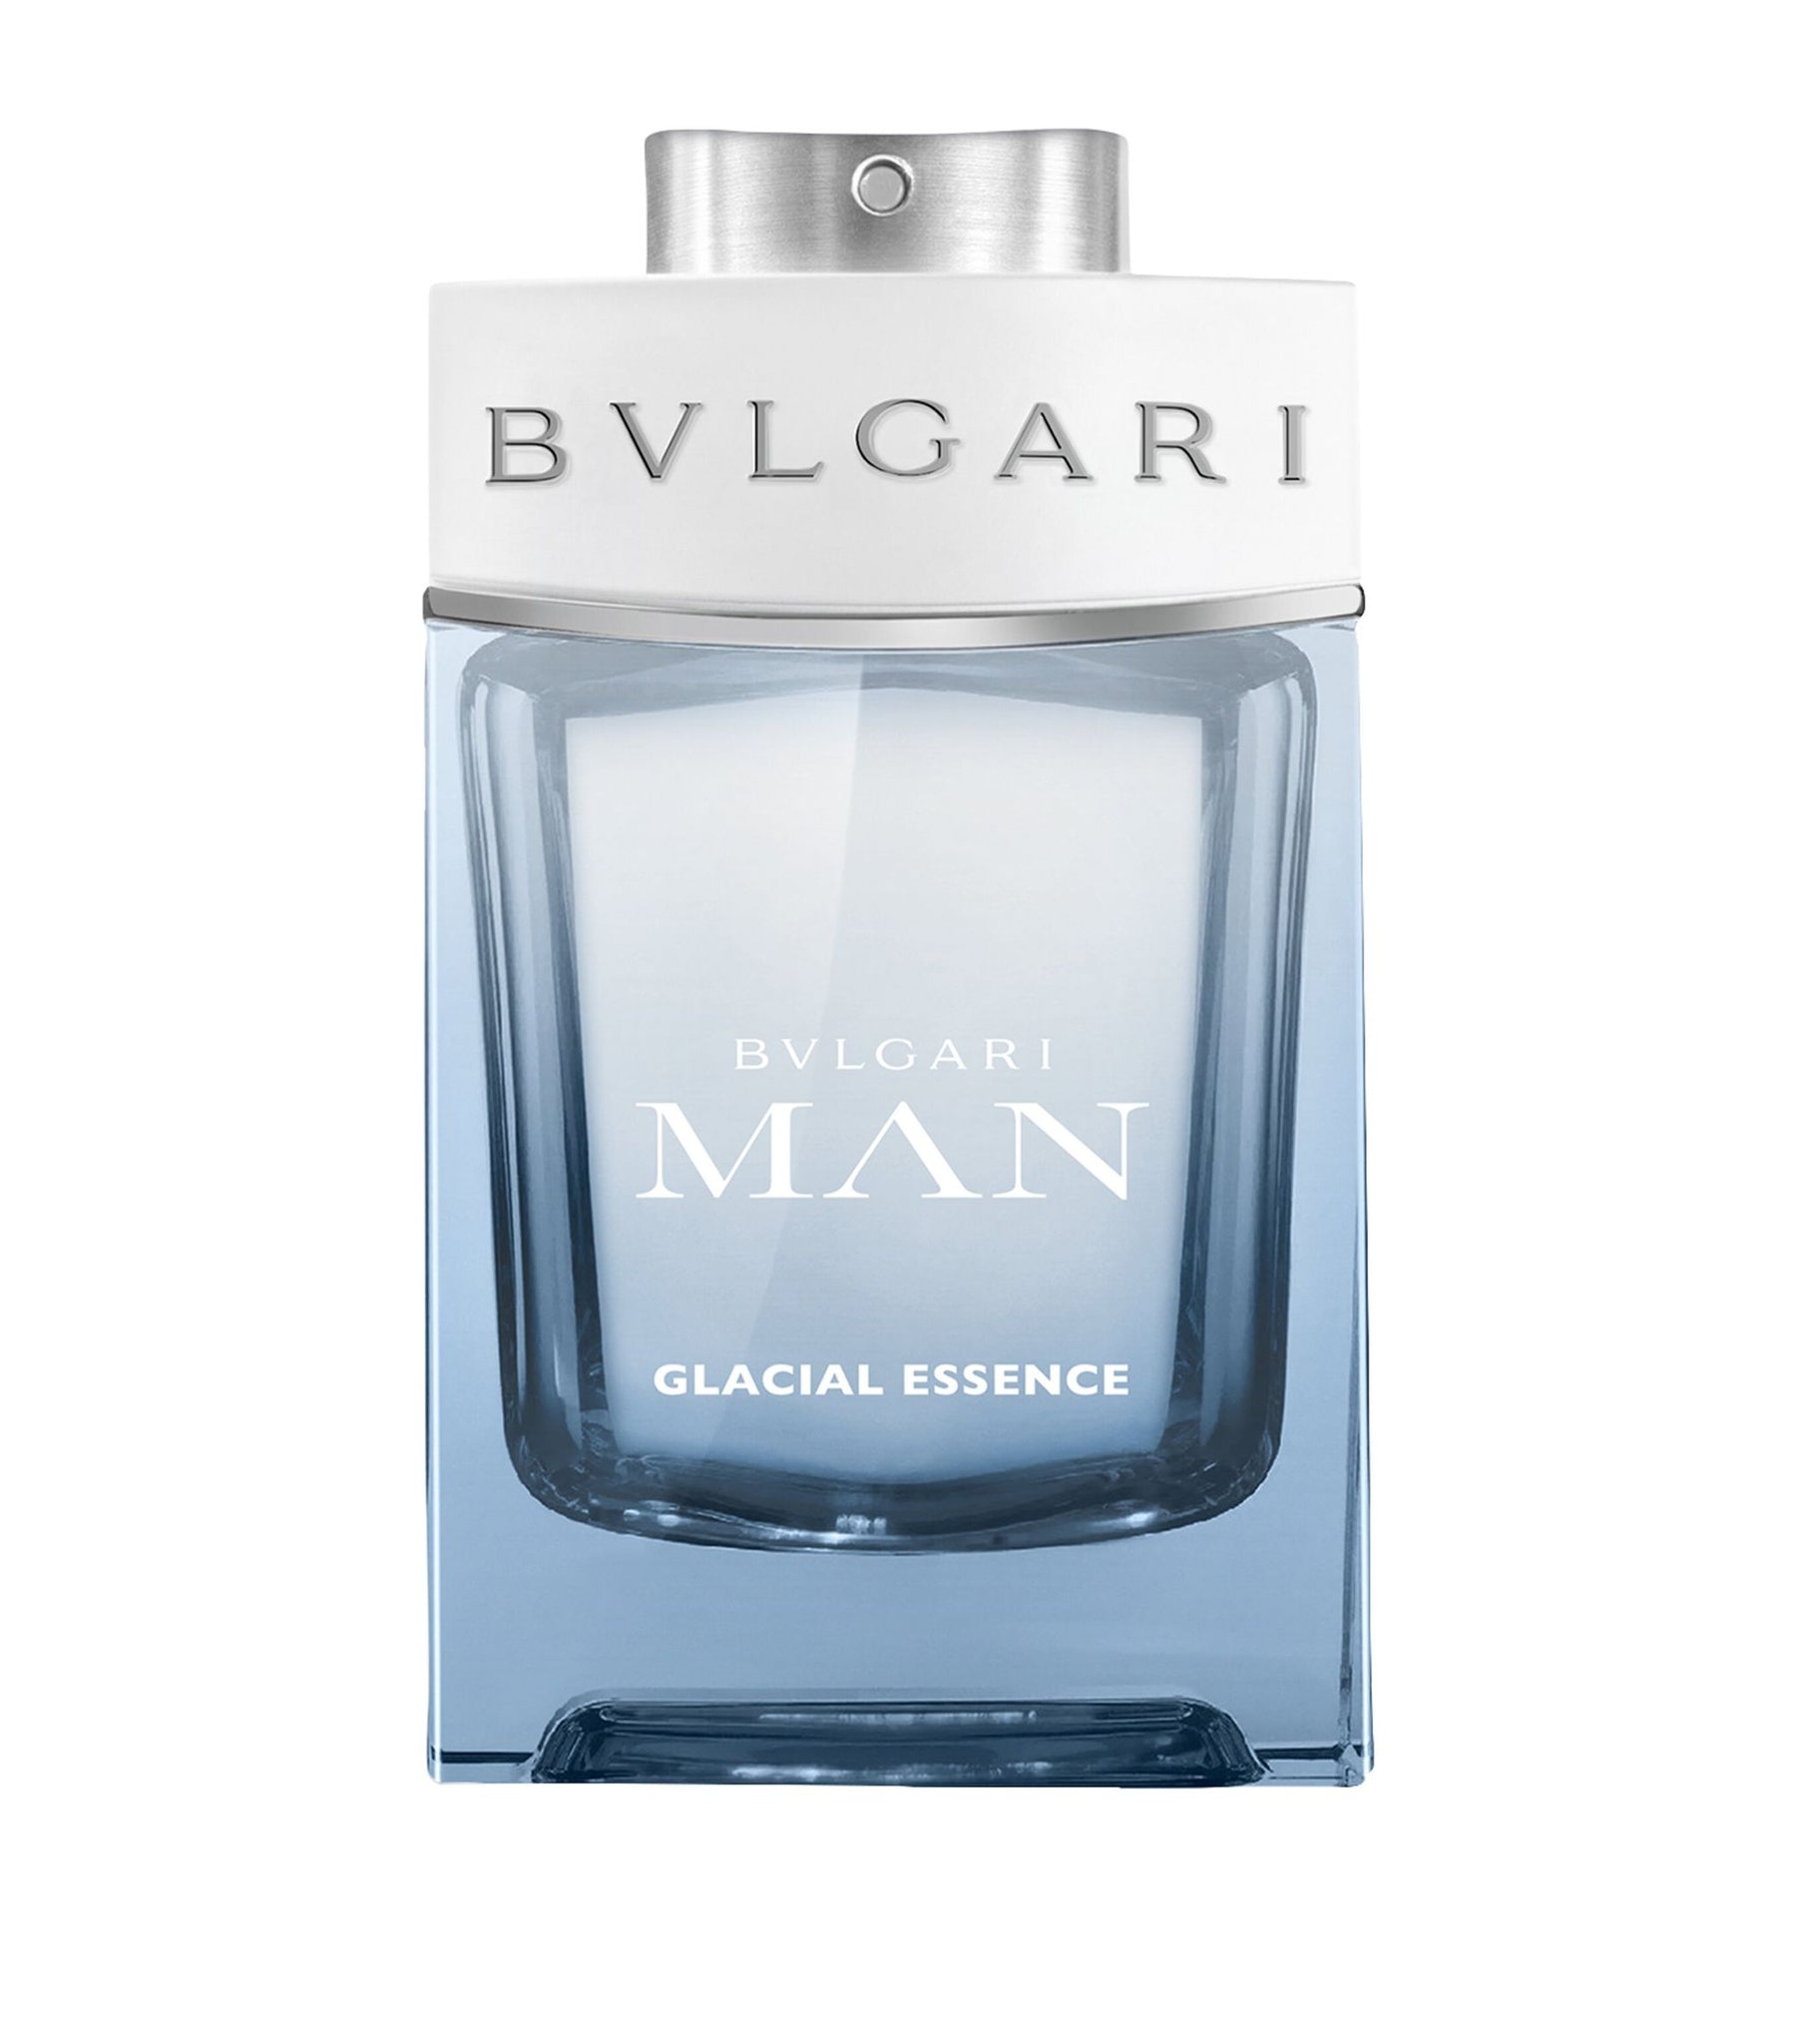 BVLGARI Man Glacial Essence Eau De Parfum Tester 100ML